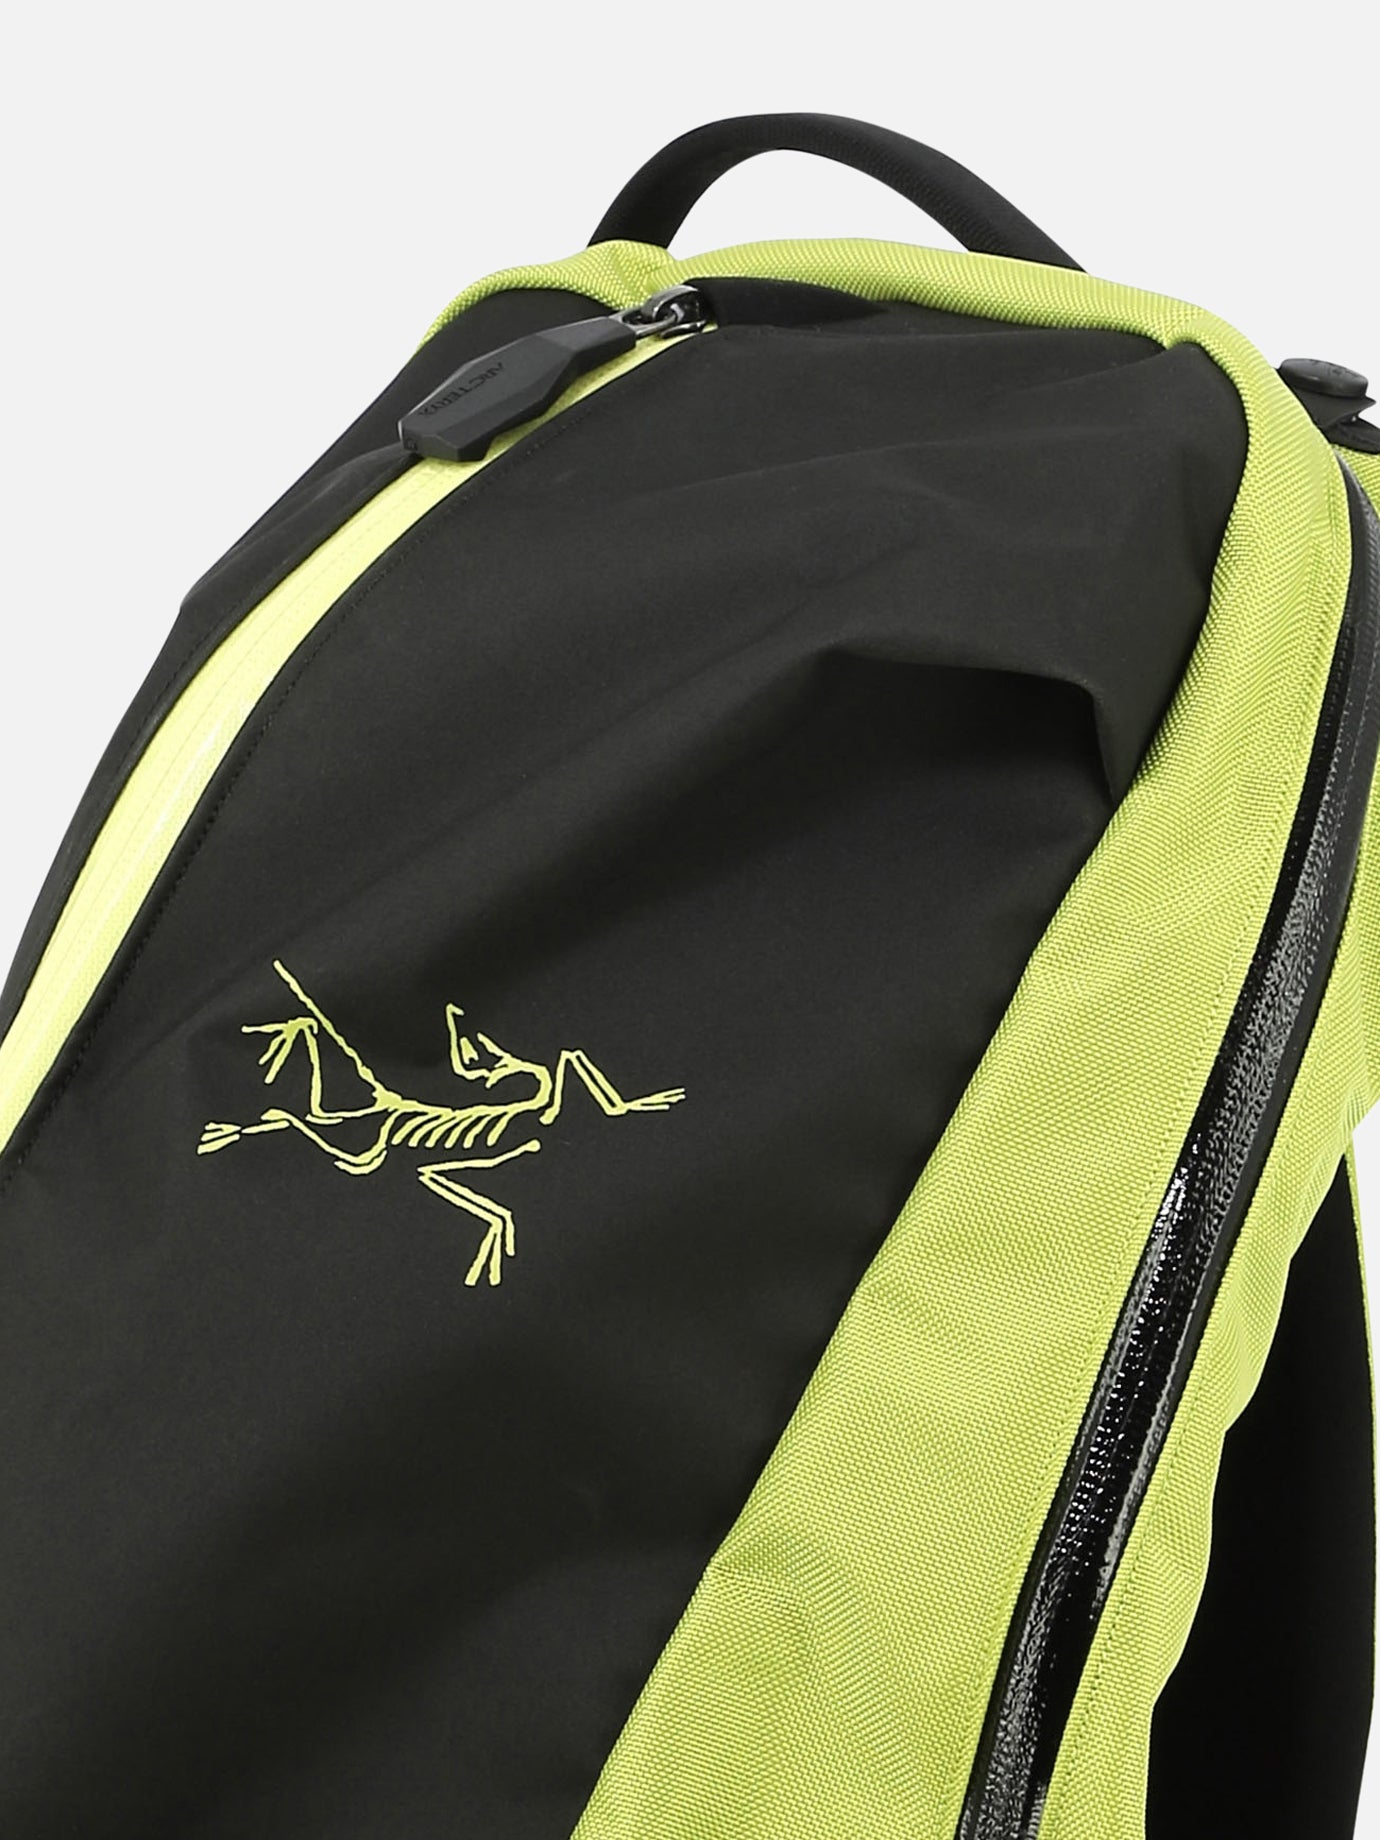 "Arro 22" backpack